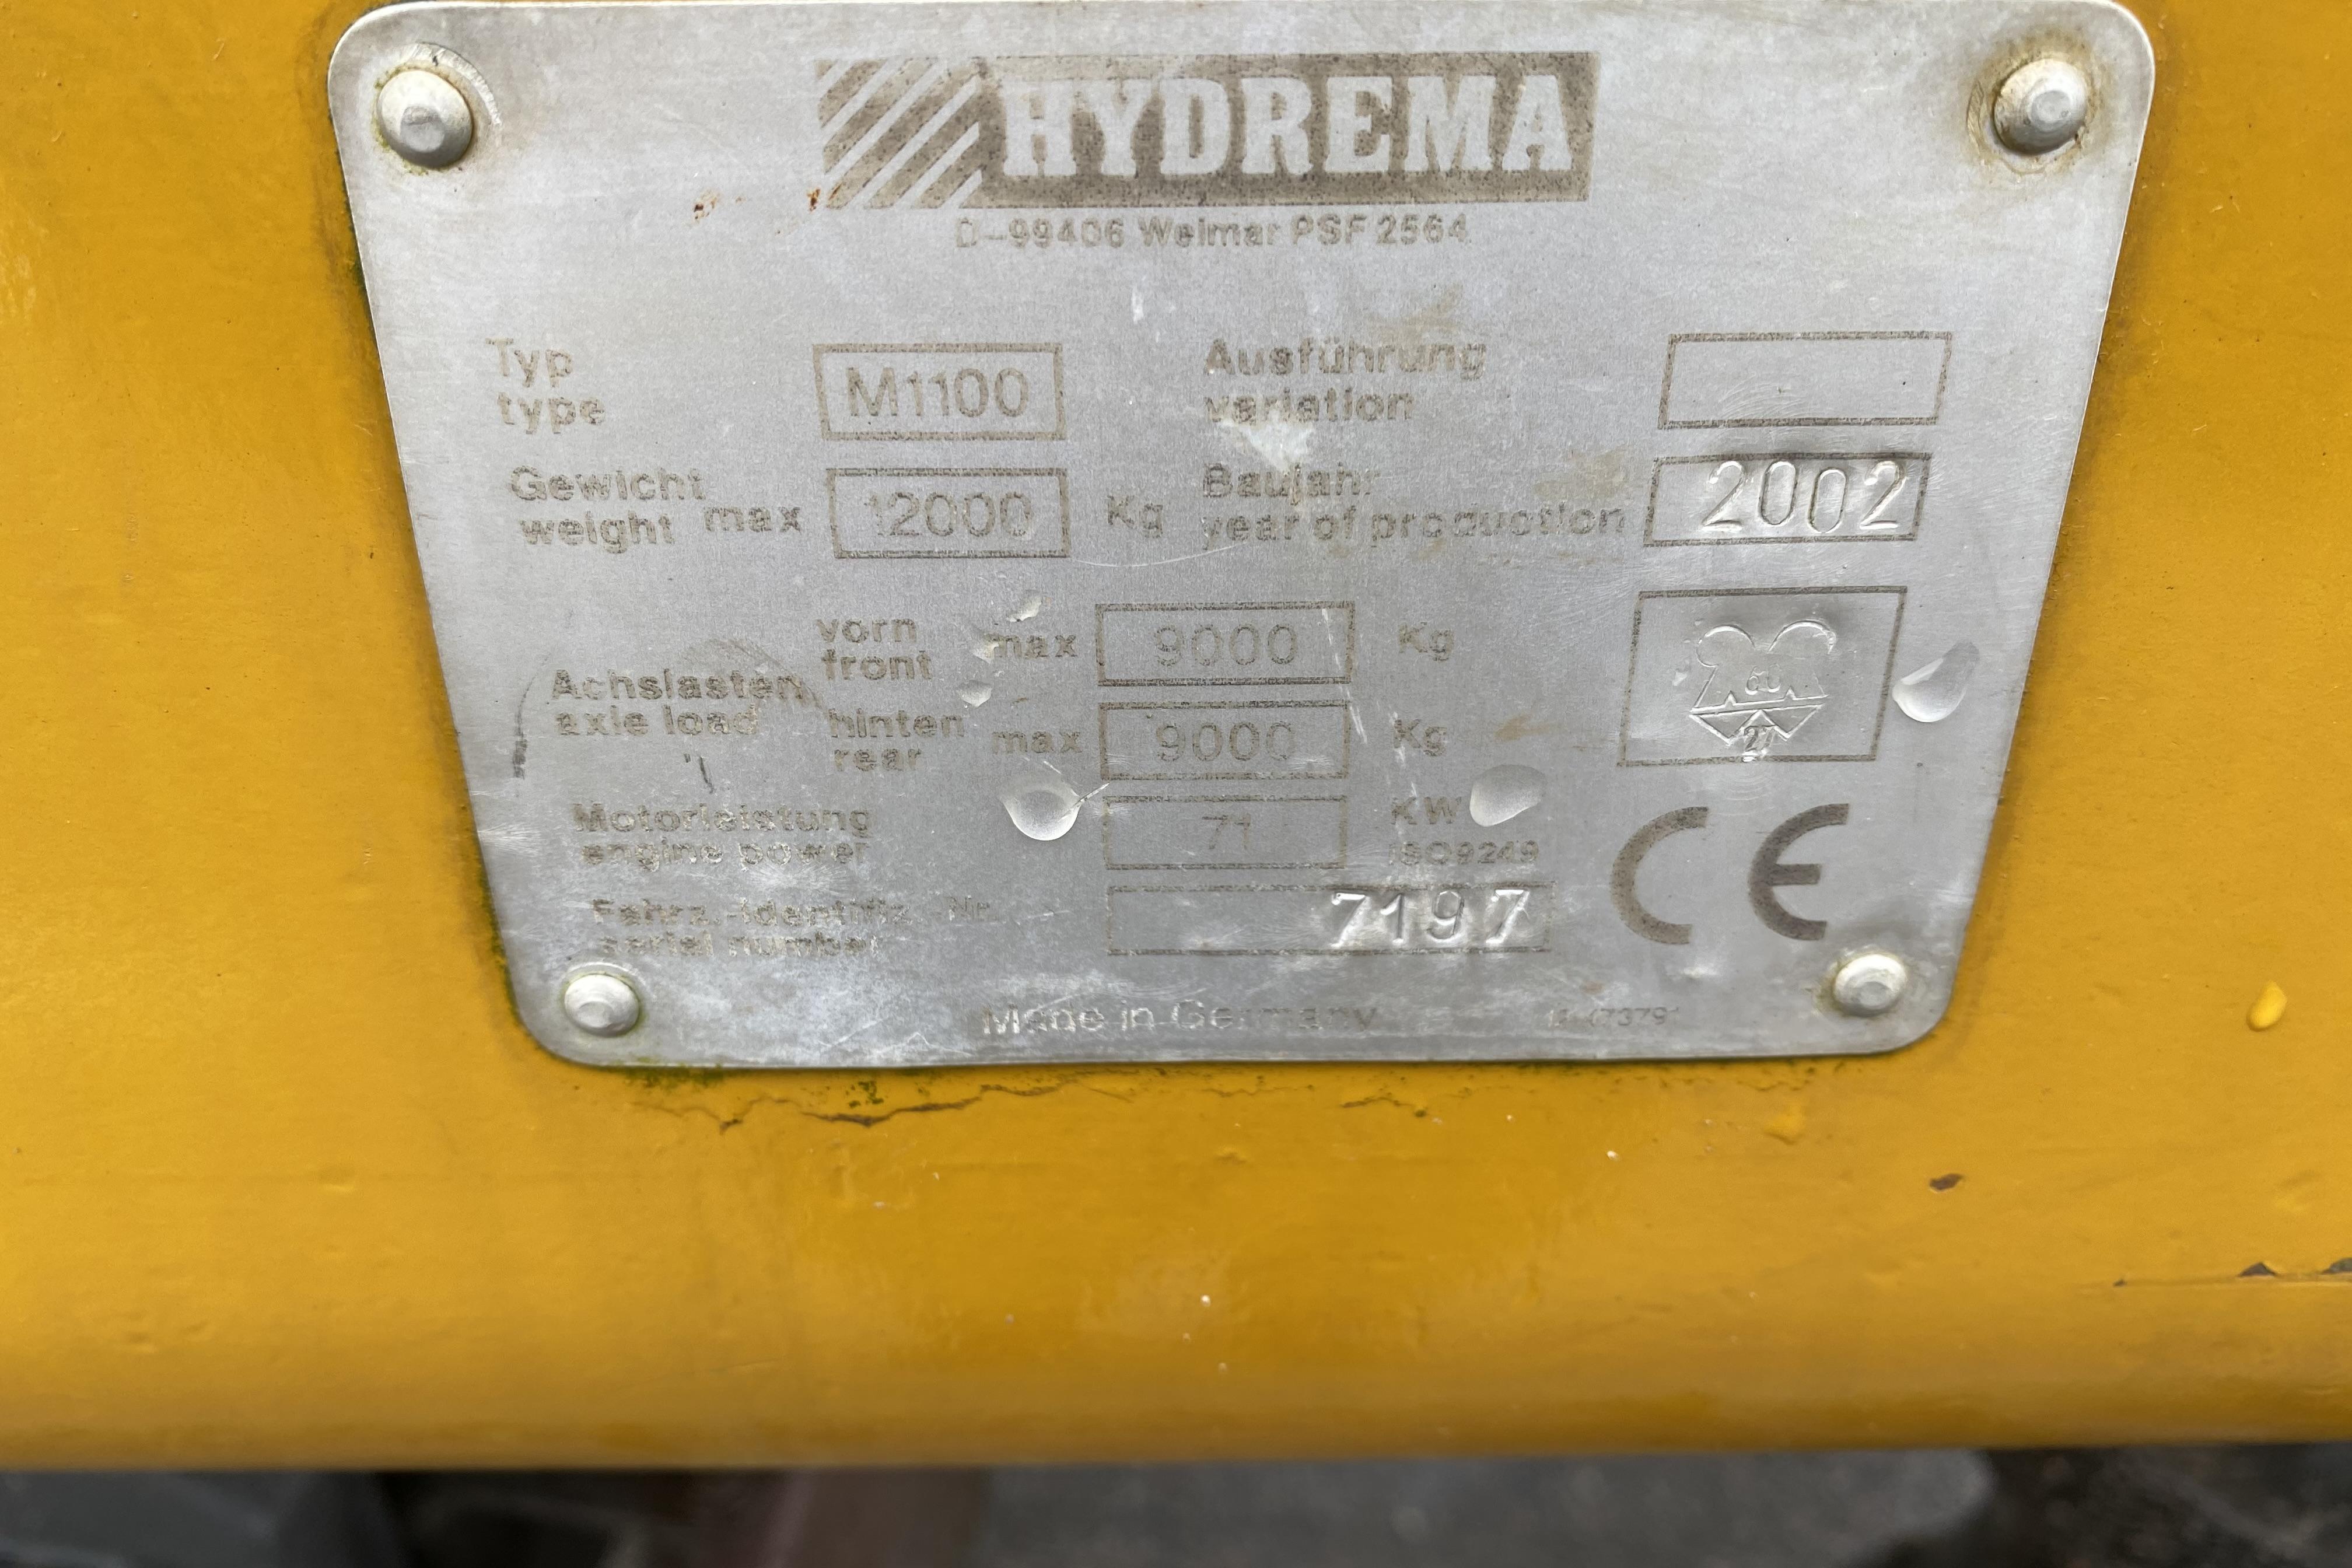 Hydrema M1100 - 0 km - 2002